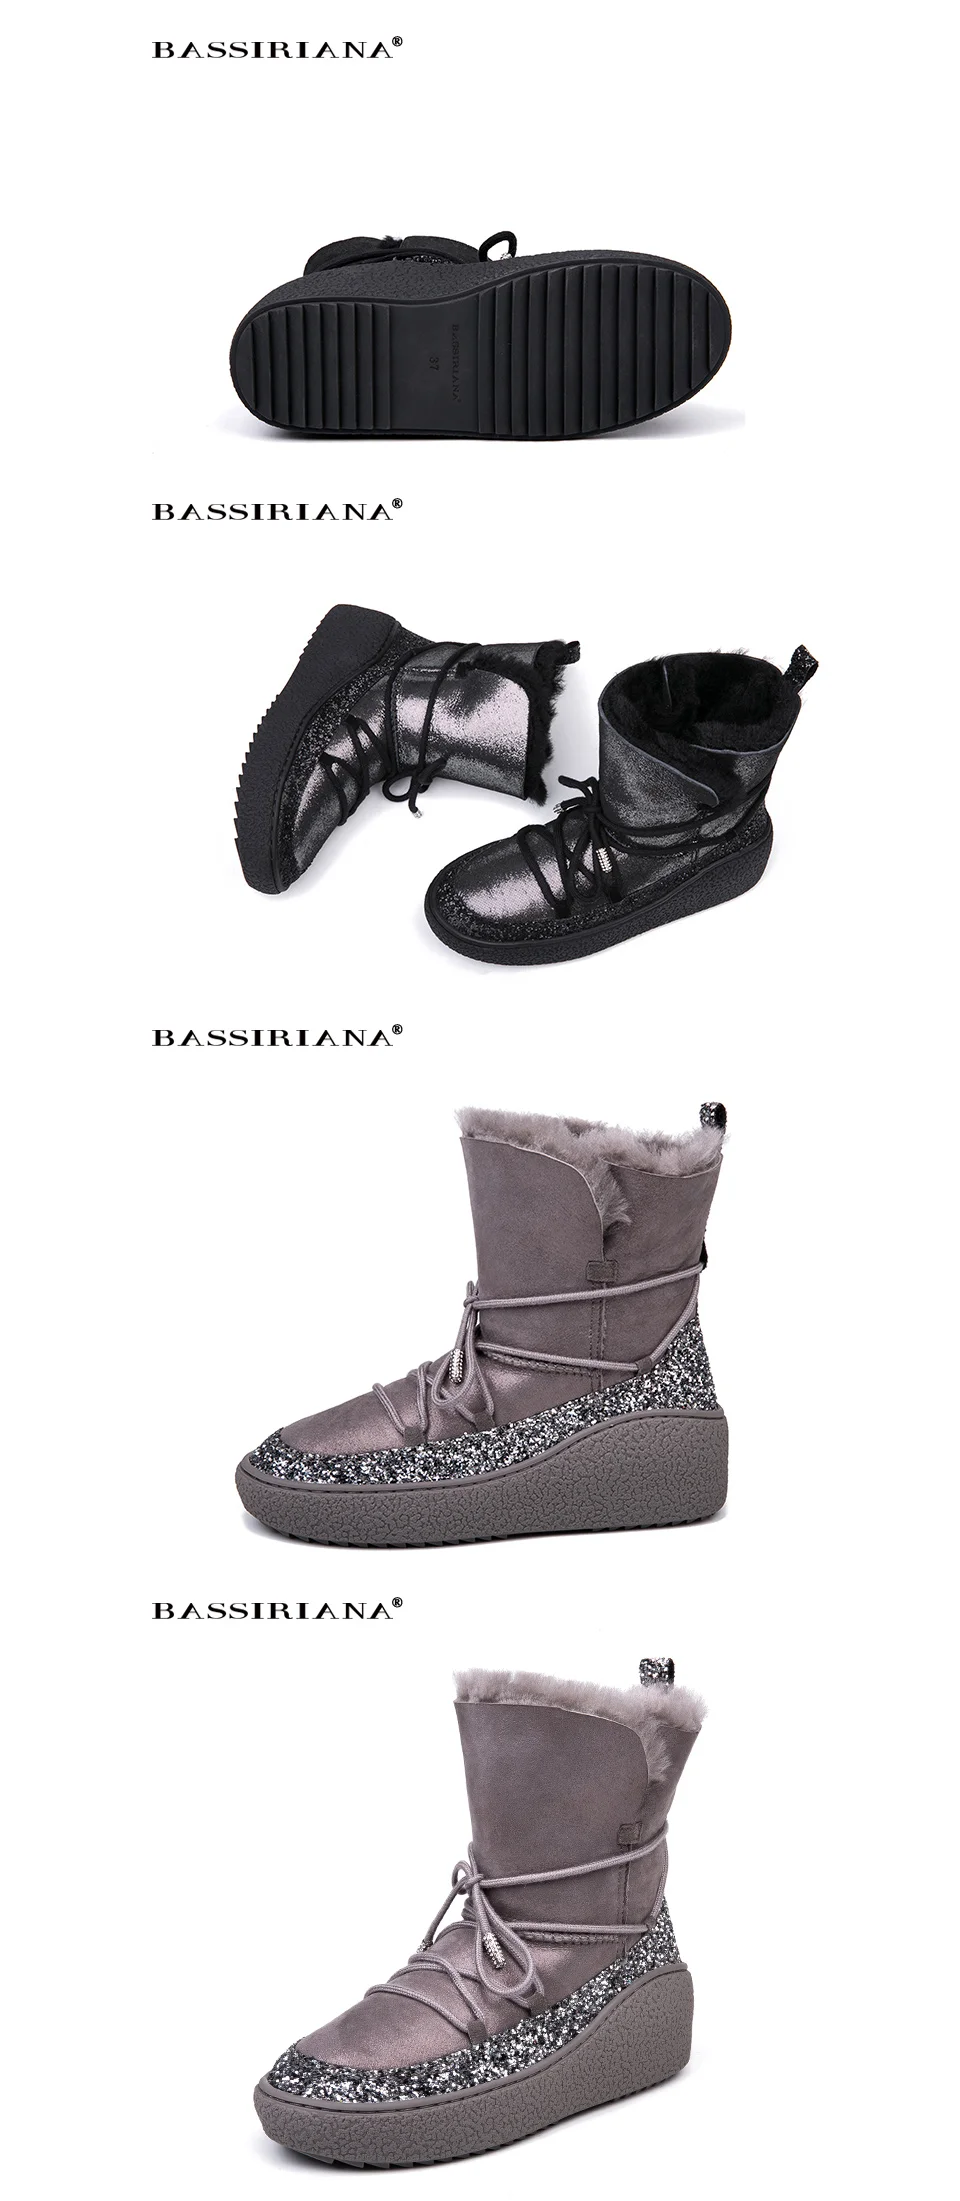 BASSIRIANA/зима Ботинки женские дубленки snowboots черный серый 35-40